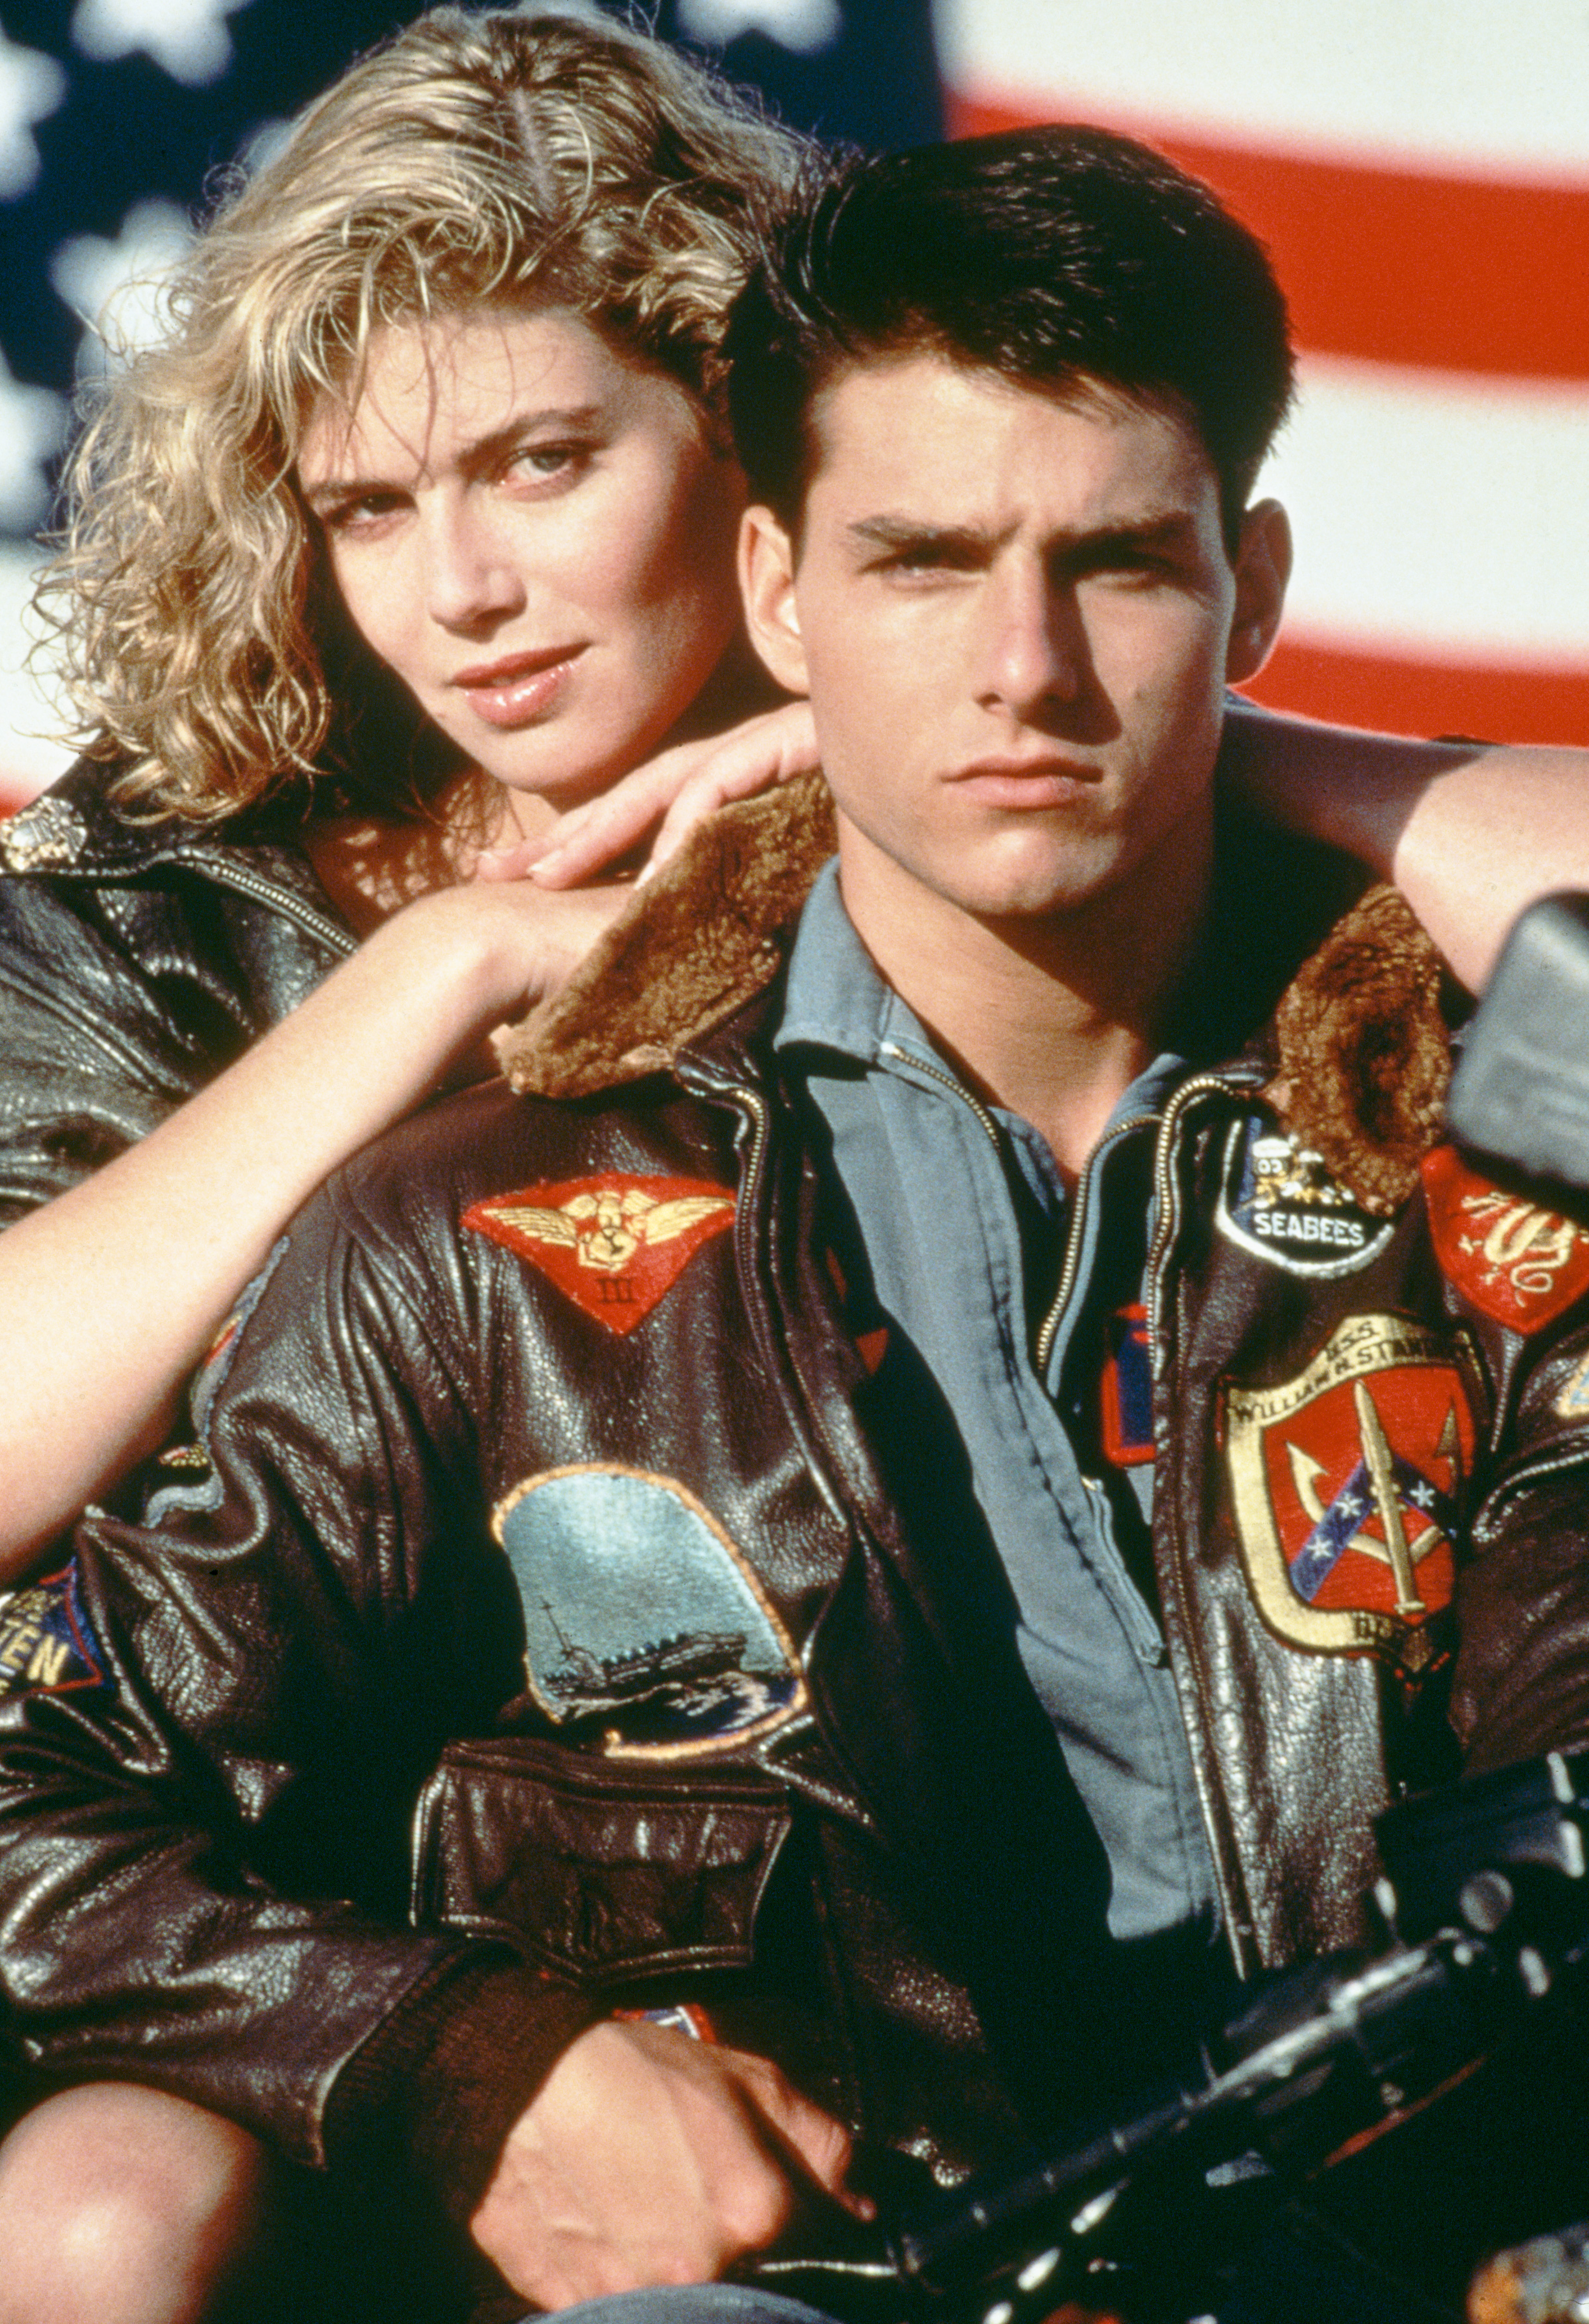 Tom Cruise as Lieutenant Pete 'Maverick' Mitchell, and Kelly McGillis as Charlotte 'Charlie' Blackwood in Top Gun